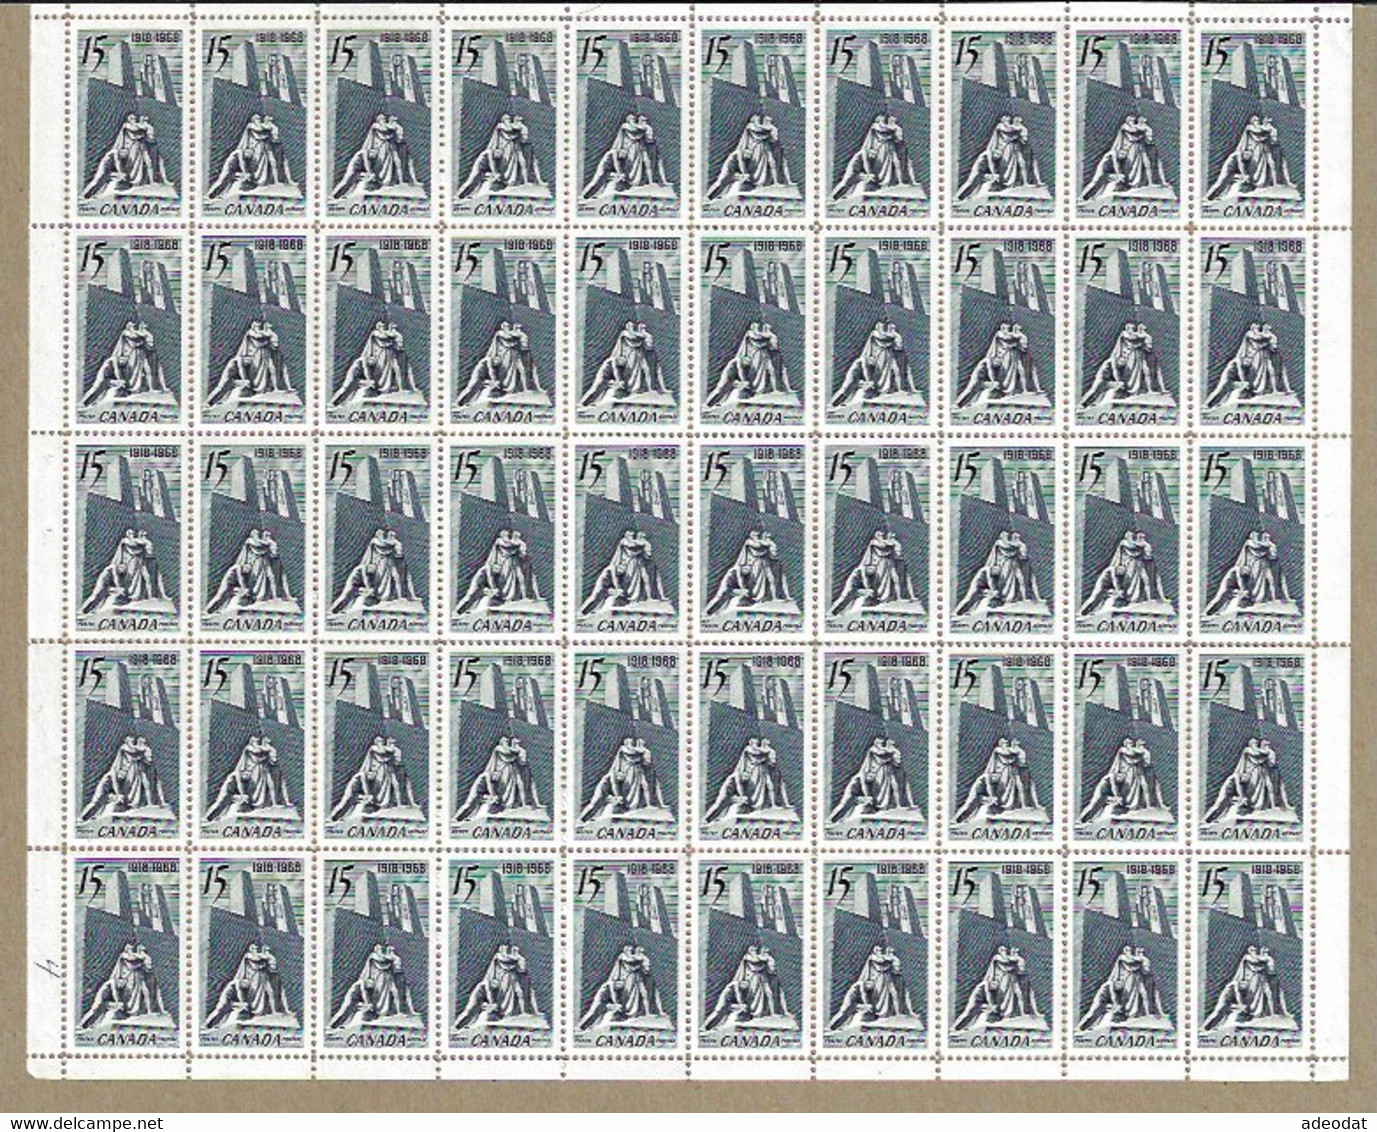 CANADA 1968 SCOTT 486 MNH SHEET OF 50 CAT VALUE US $100 - Feuilles Complètes Et Multiples